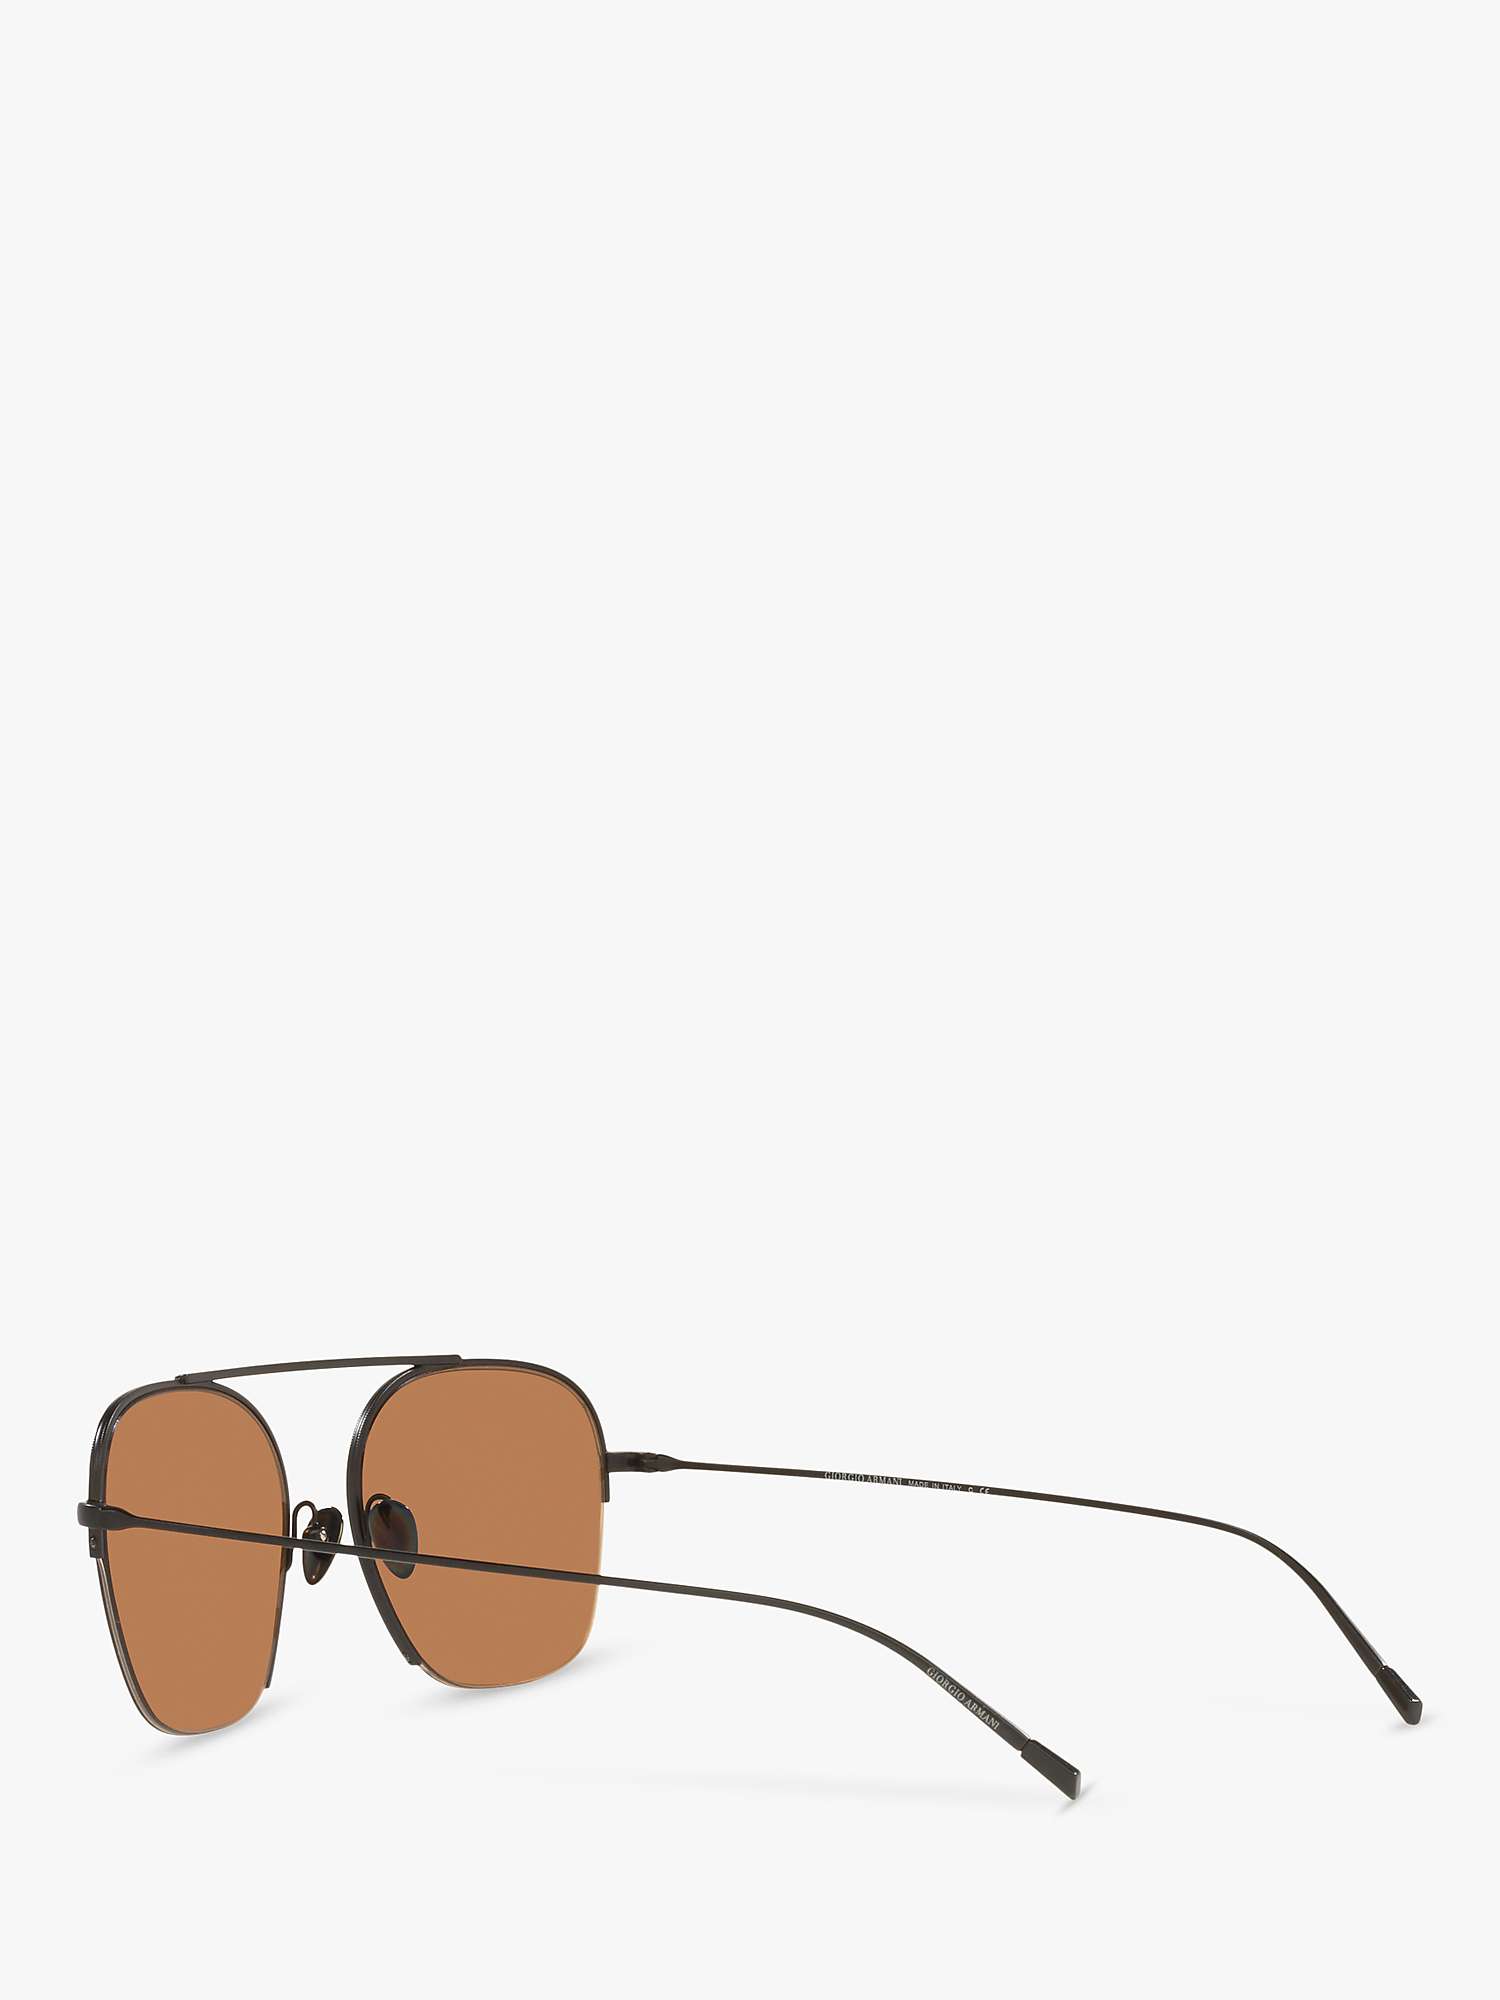 Buy Emporio Armani AR612430 Men's Square Sunglasses, Matte Black/Brown Online at johnlewis.com